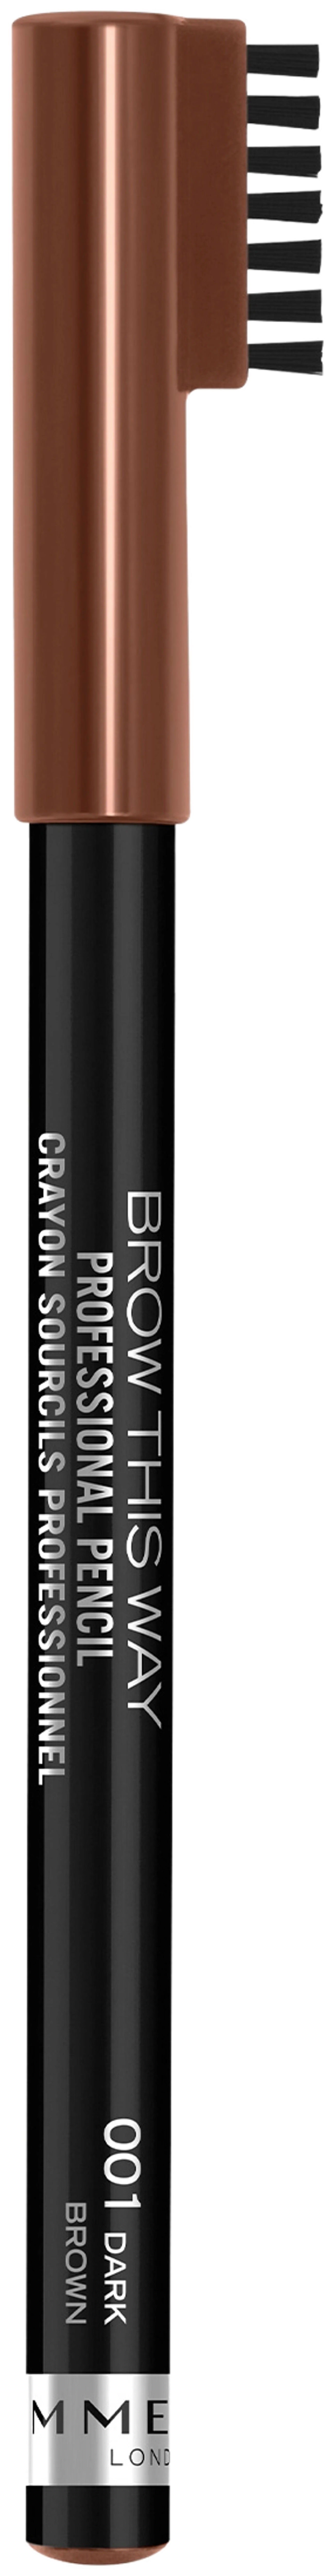 Rimmel 1,4g Professional Eyebrow Pencil 001 Dark Brown kulmakynä - 1